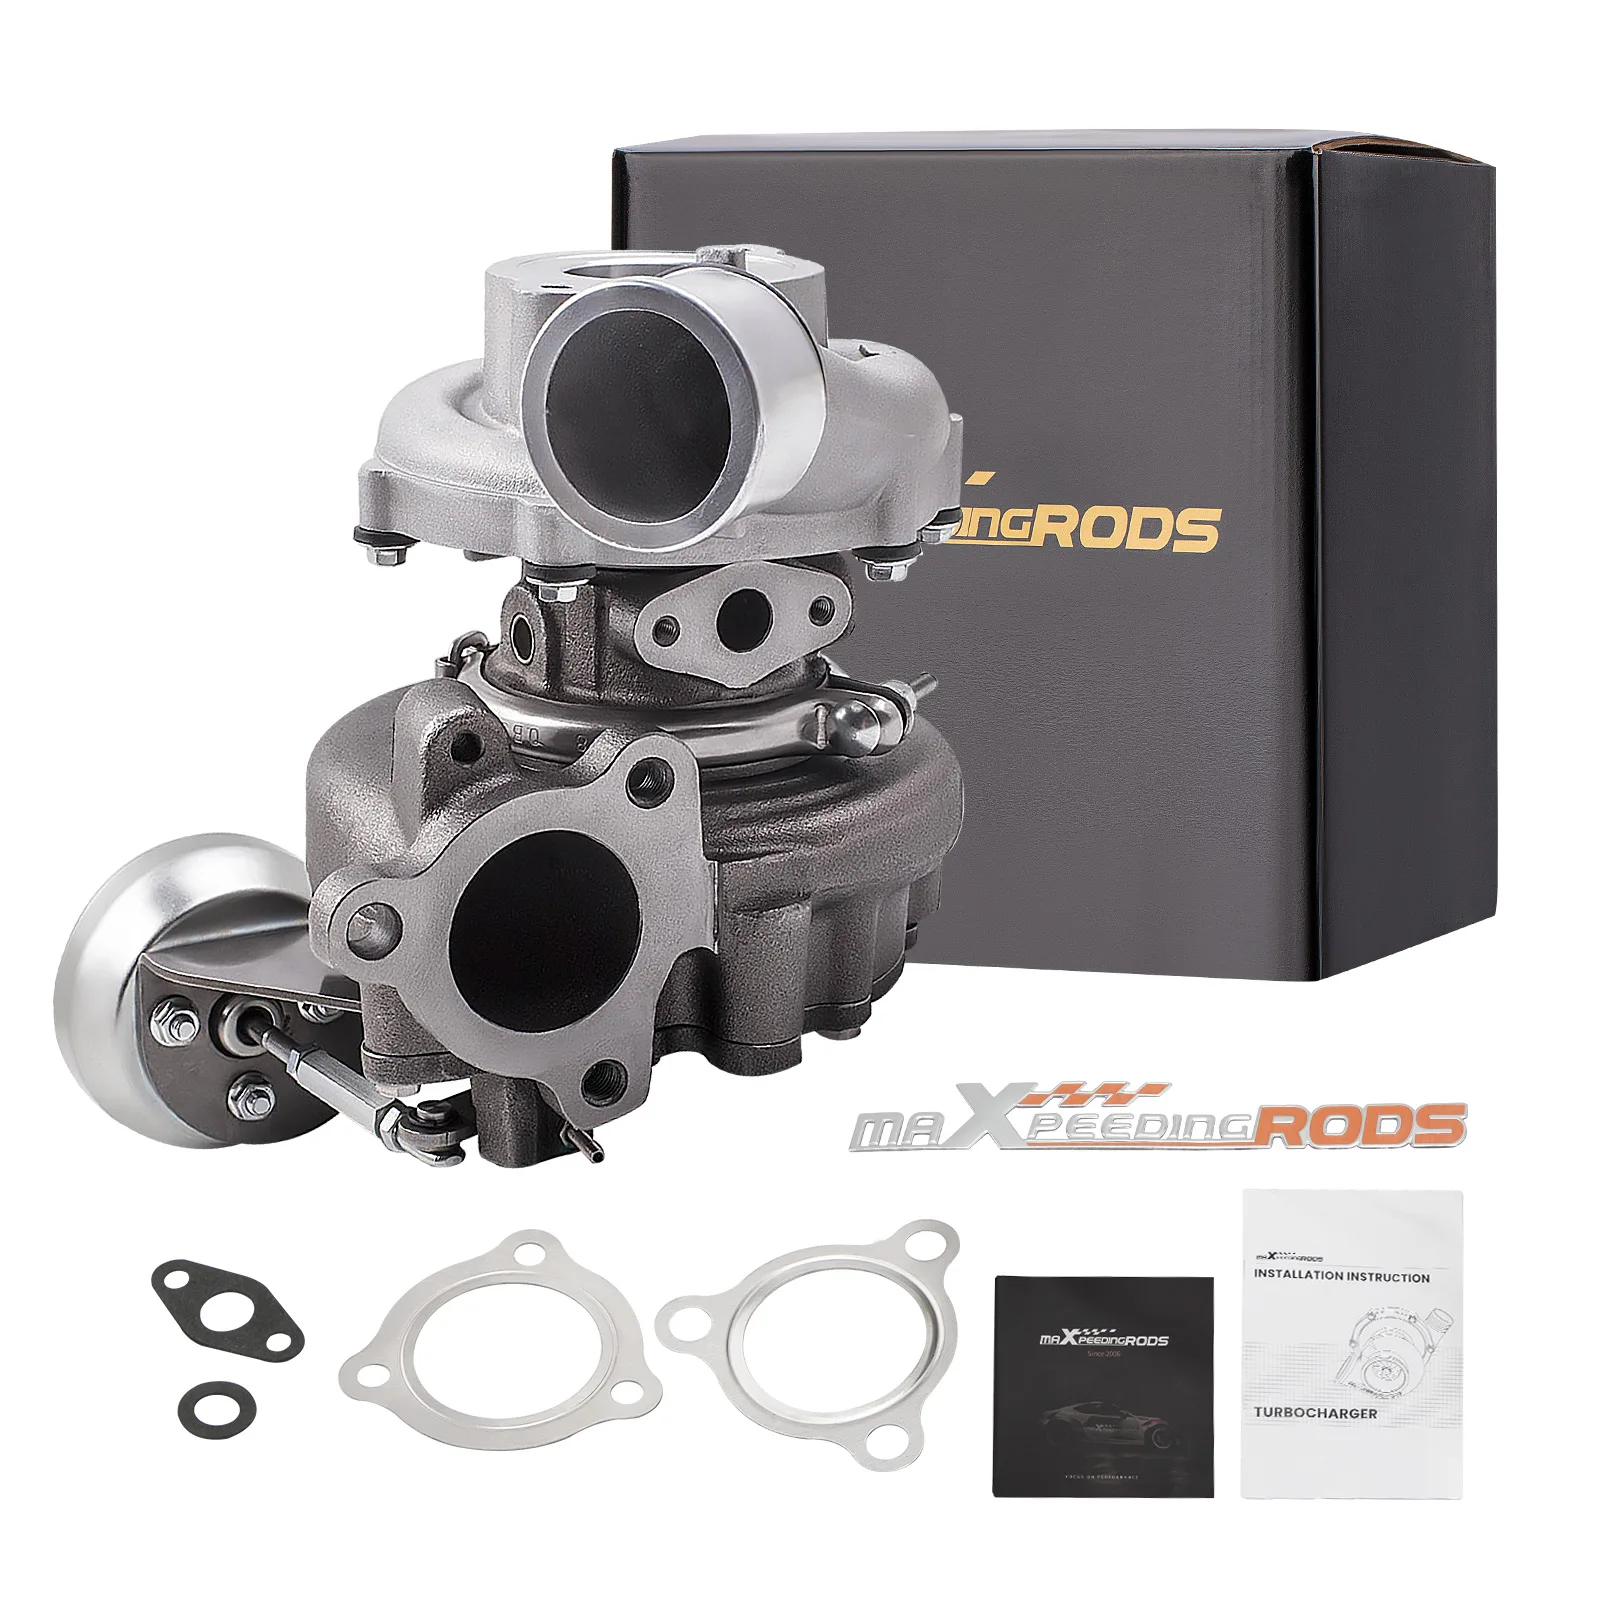 

Turbocharger for Toyota Corolla Avensis 2.2 D-4D 177BHP 130kW 2005- VB16 VB13 17201-0R022